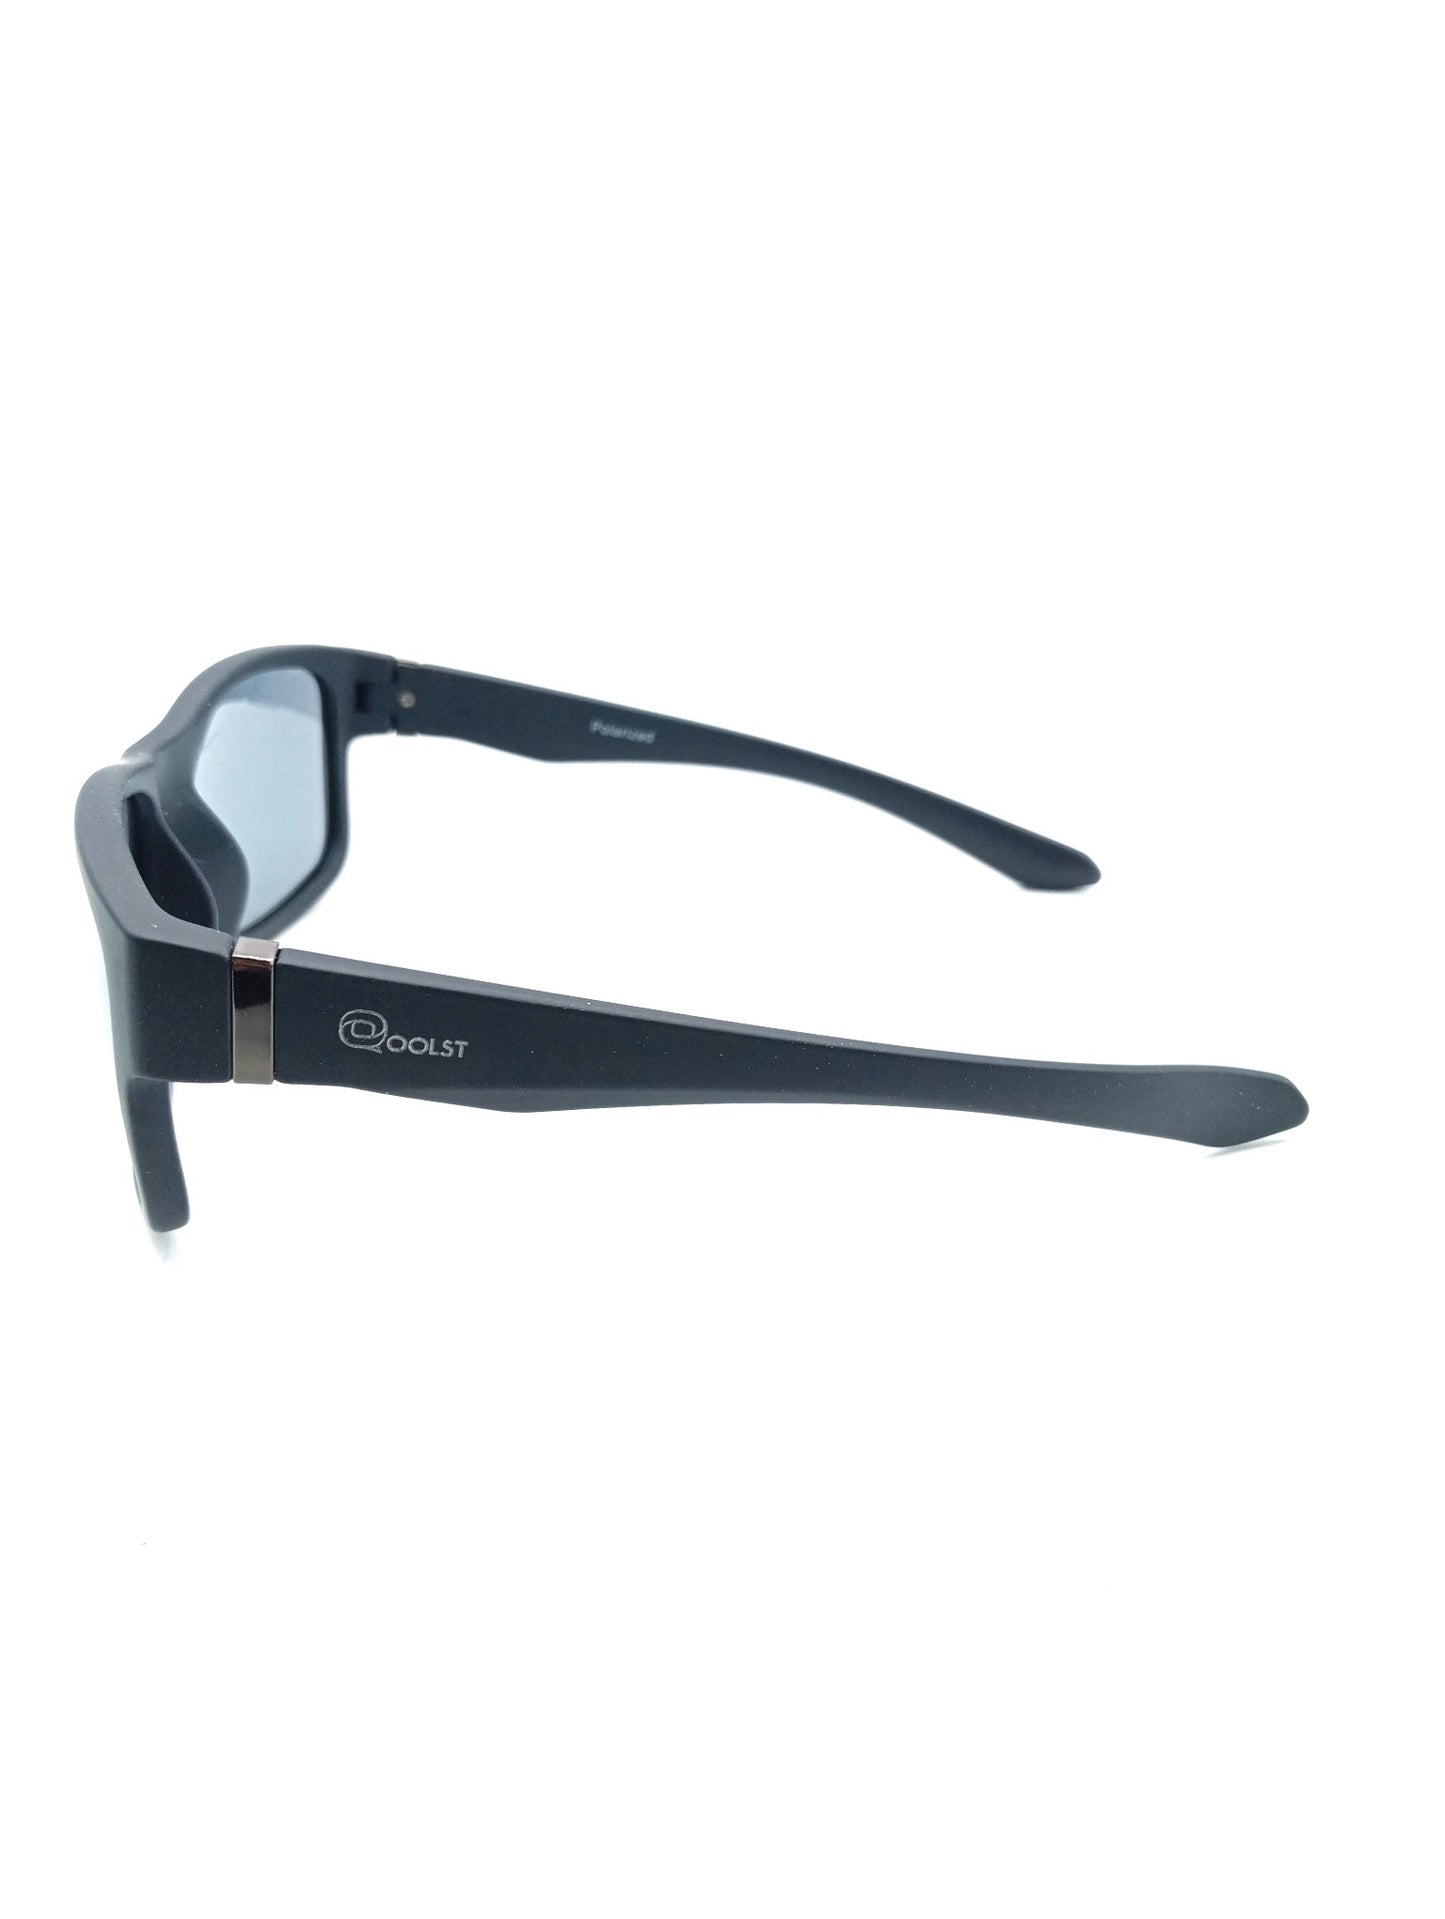 Typhoon Qoolst polarized men's and women's sunglasses